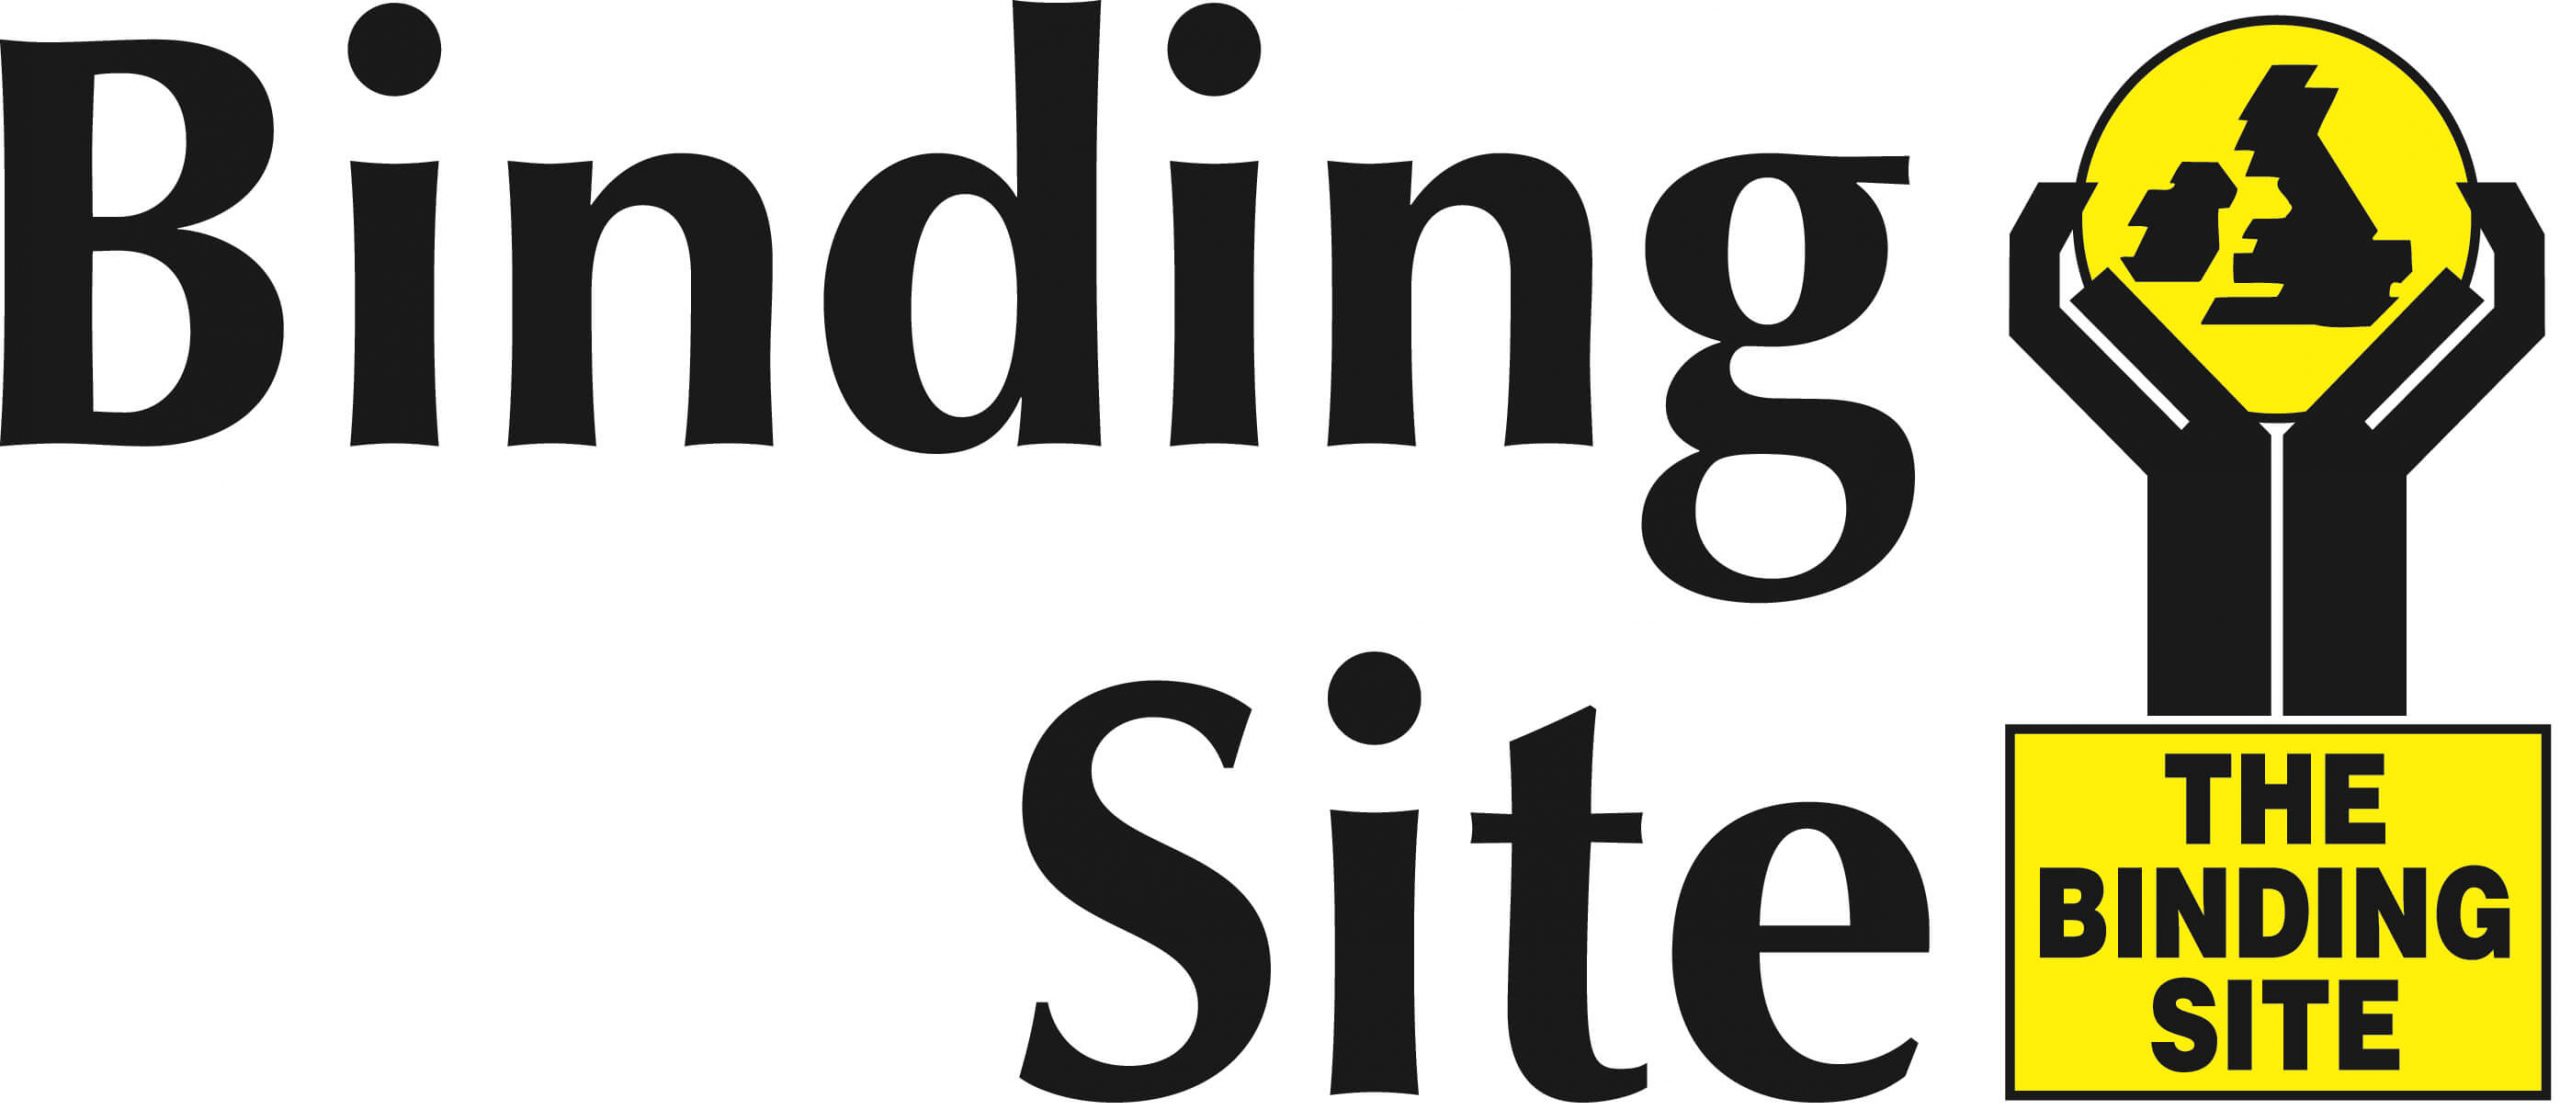 Freelite - Binding Site